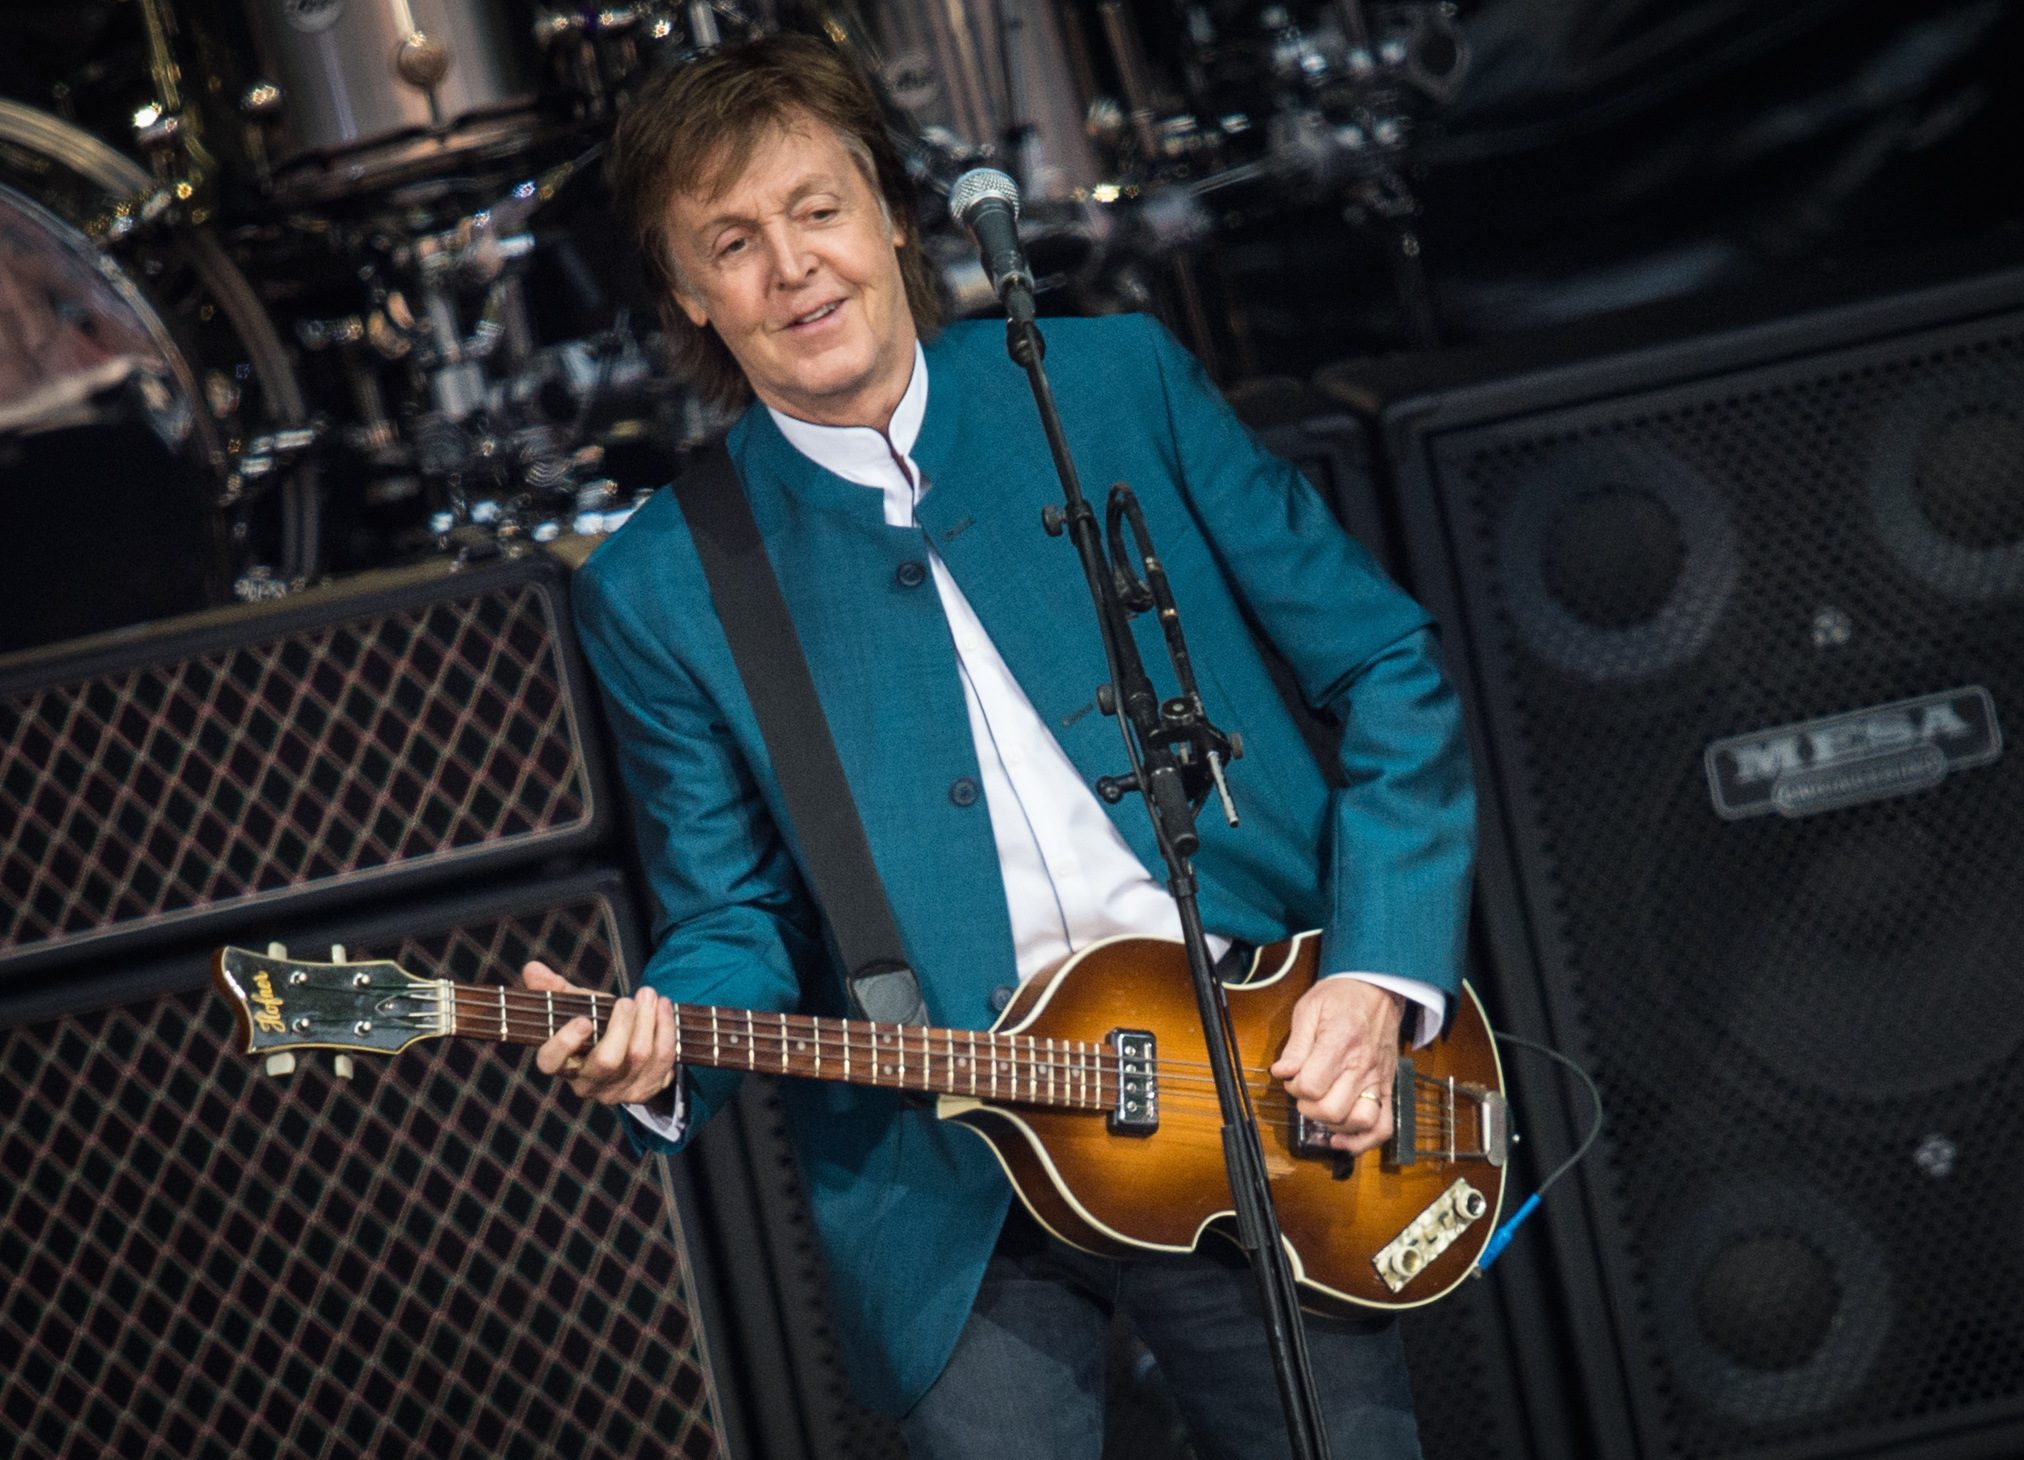 Paul McCartney says he’ll eventually slow down